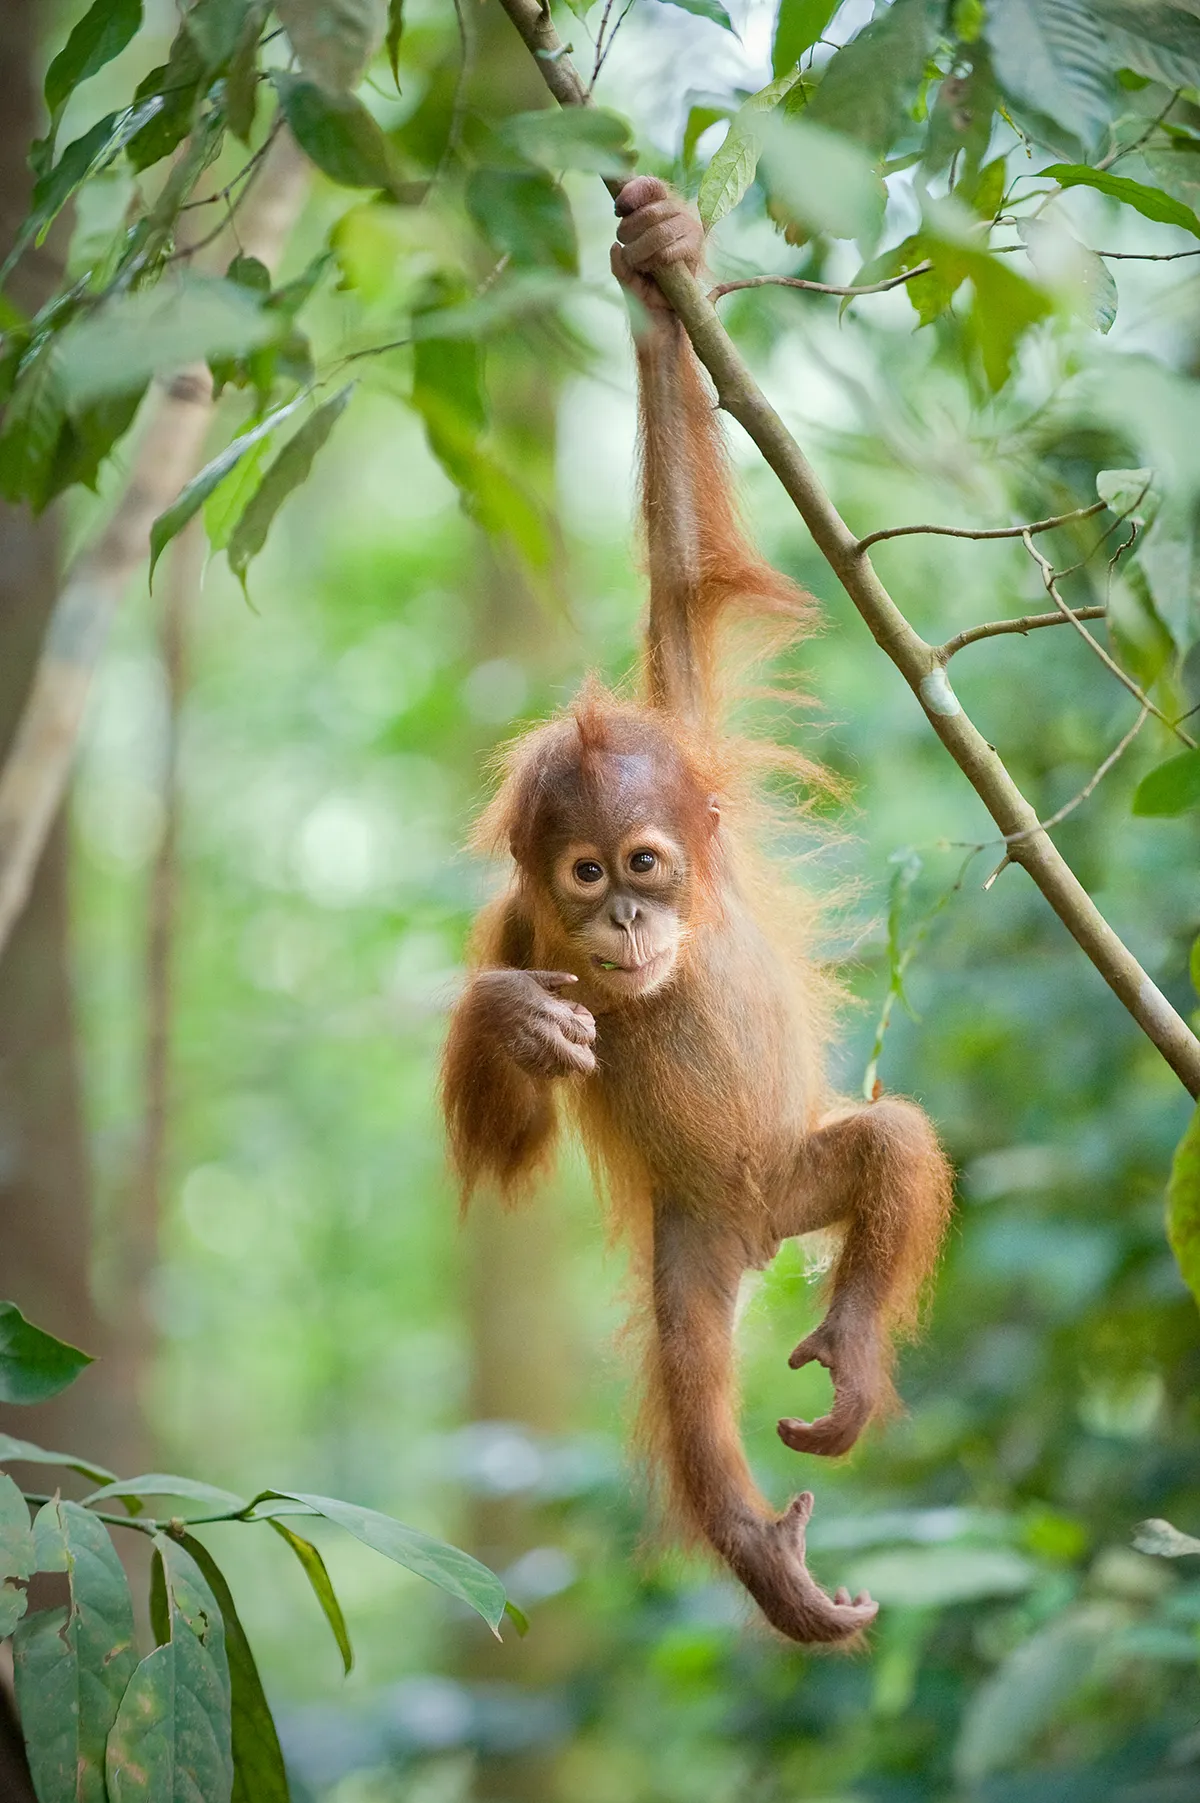 Sumatran Orangutan (Pongo abelii) 1.5 year old baby dangling from tree branch. North Sumatra, Indonesia. © Suzi Eszterhas